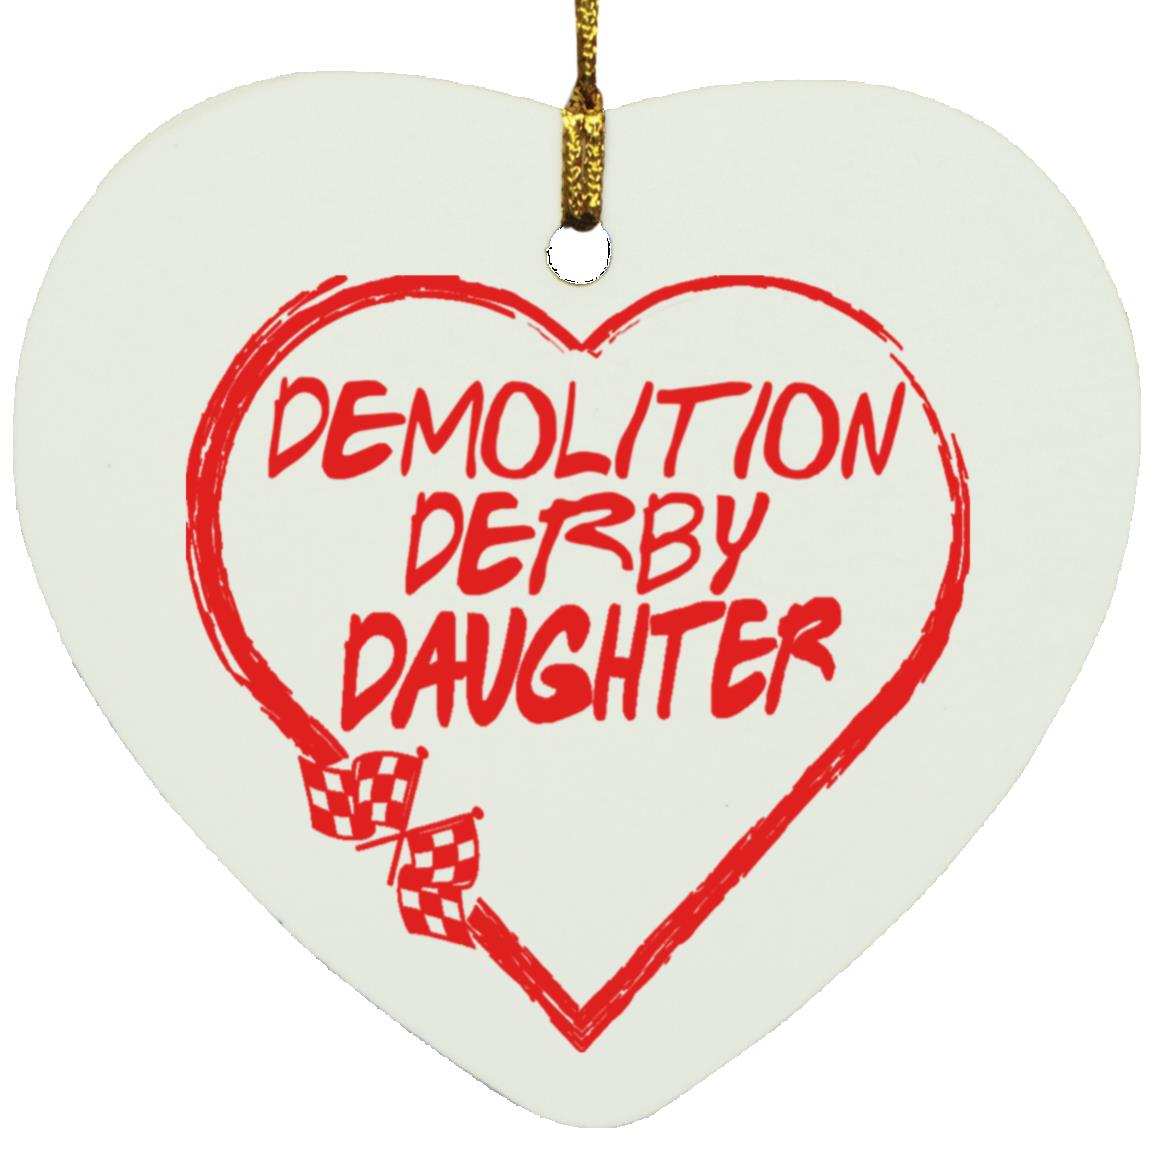 Demolition Derby Daughter Heart Ornament